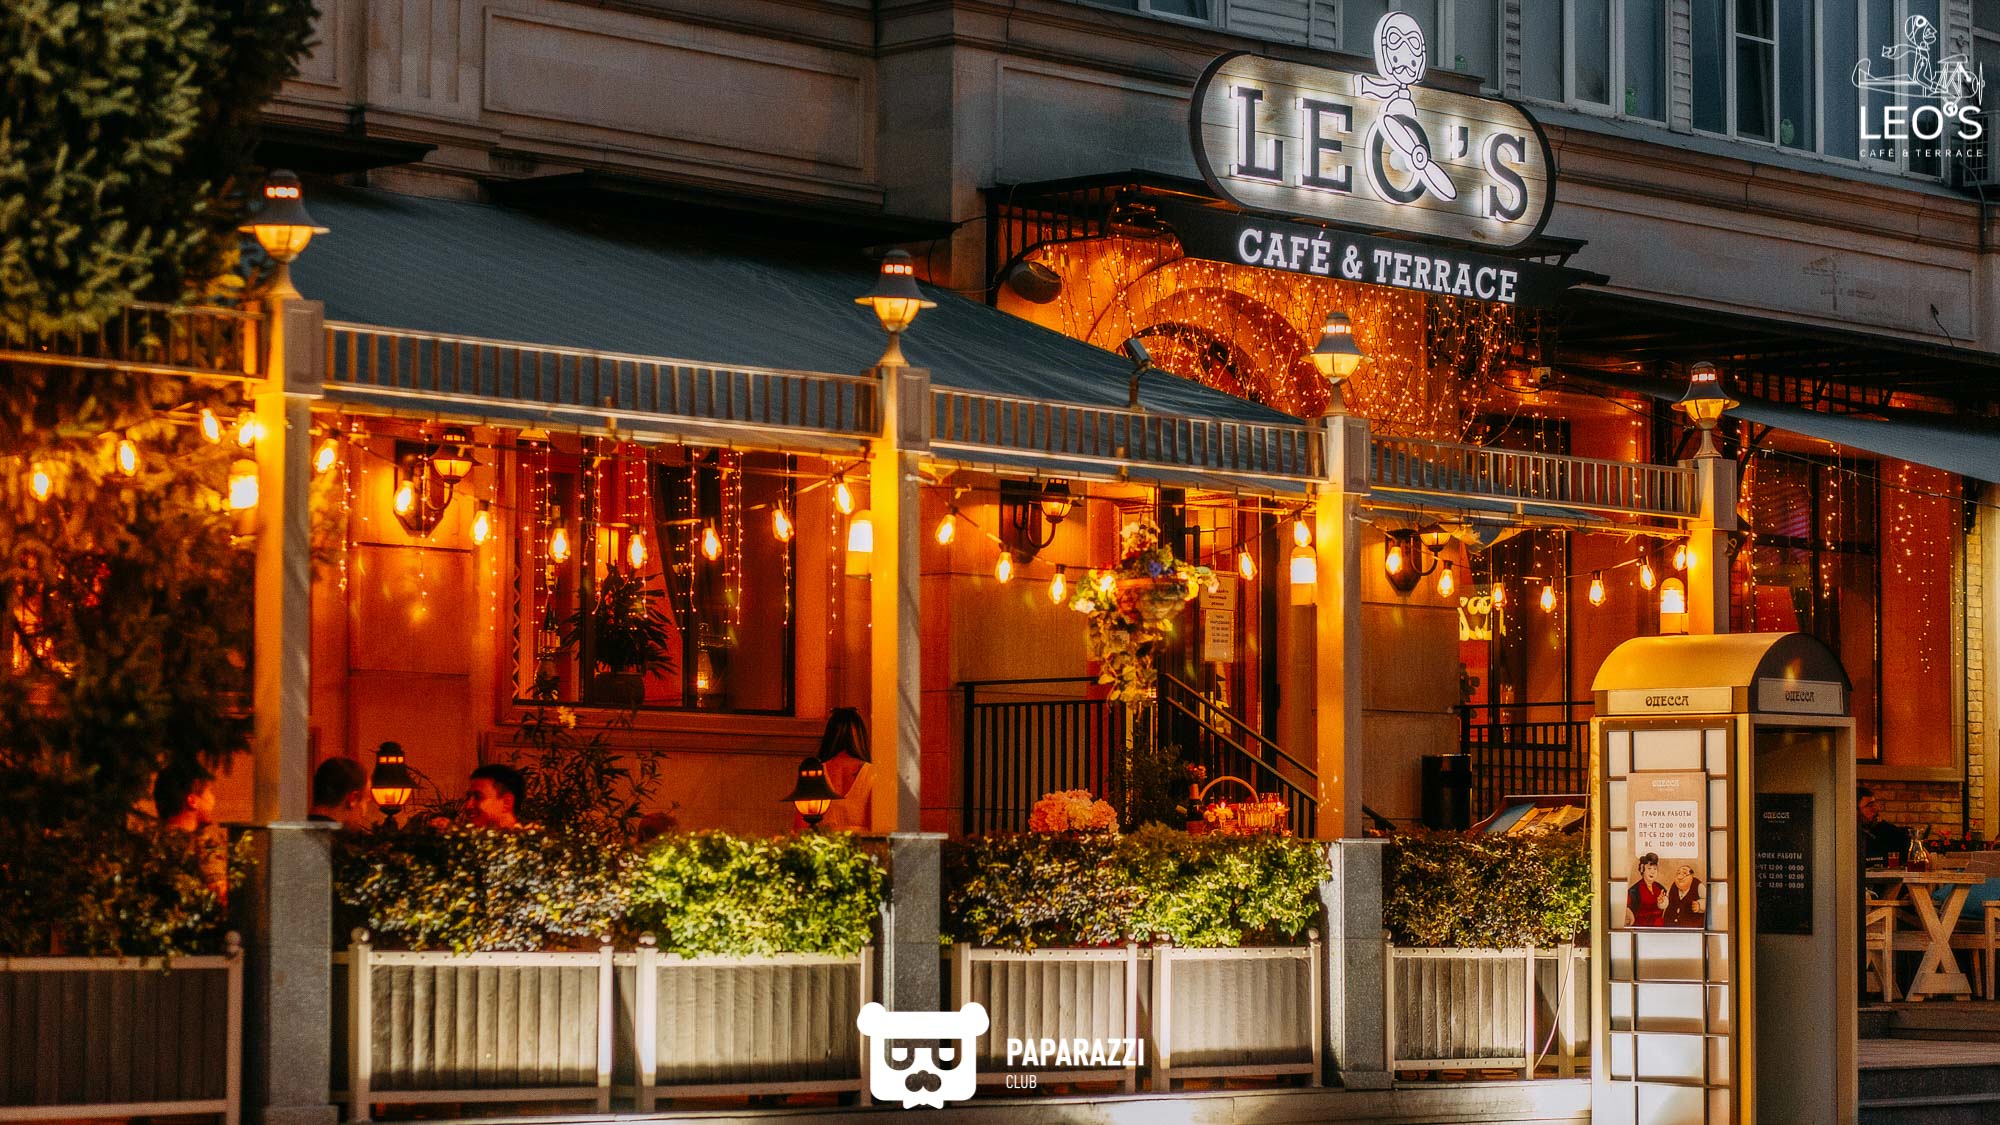 Leo's Cafe & Restaurant